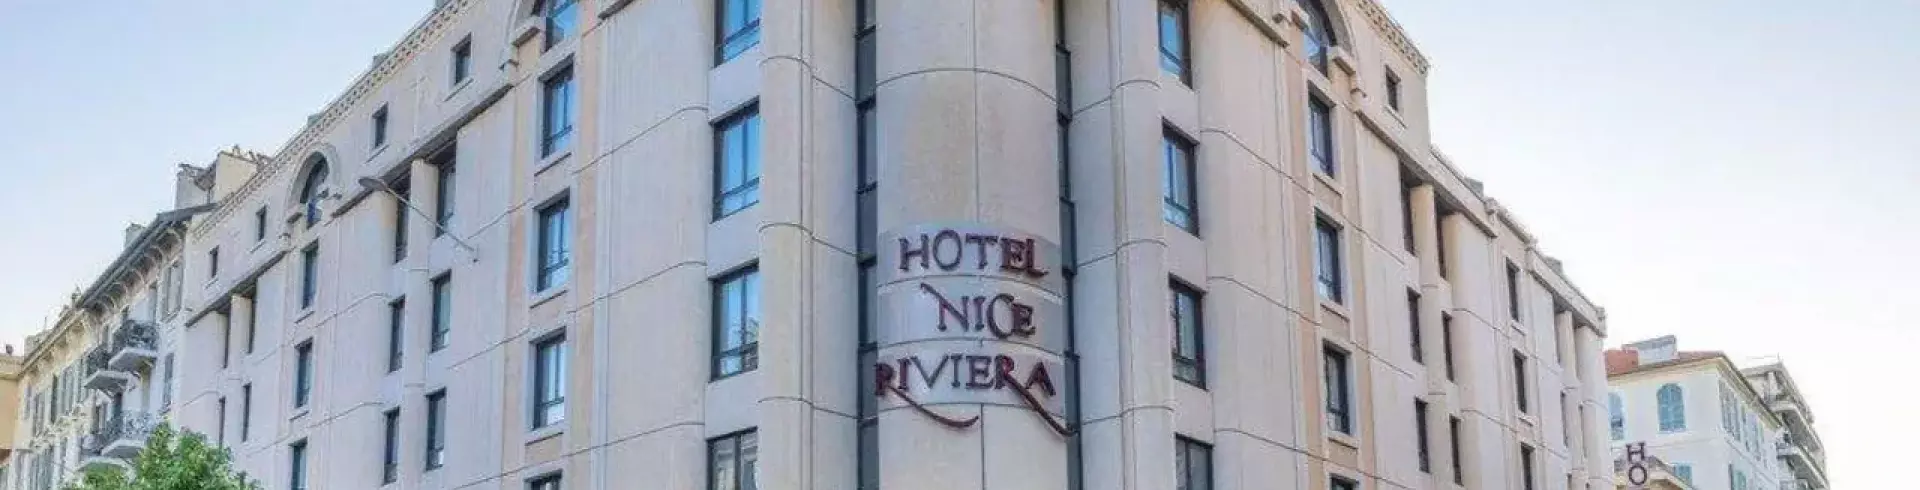 Nice Riviera (x Rivoli)